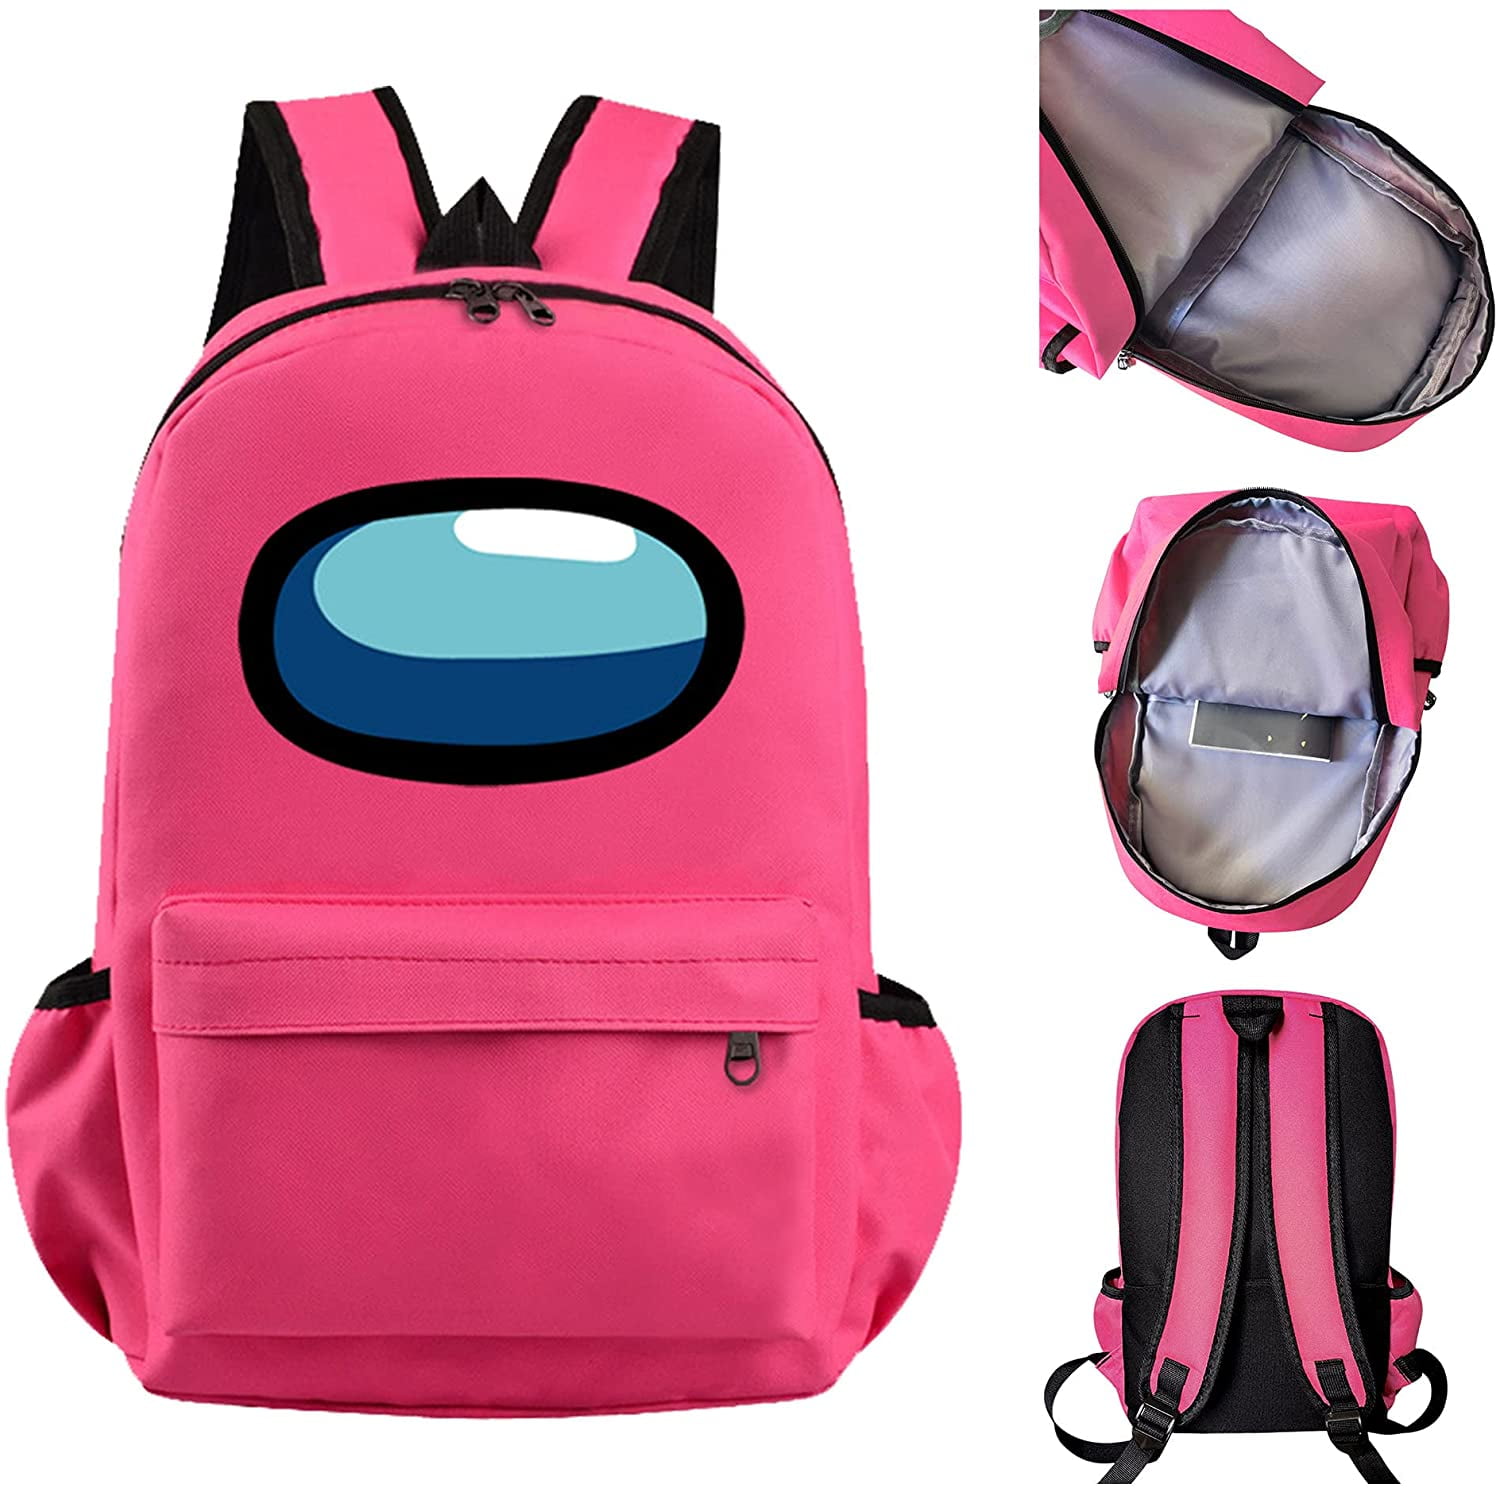 Mermaid Princess Large Laptop Bag Travel Hiking Daypack For Men Women School Work Backpack 17 Inch 